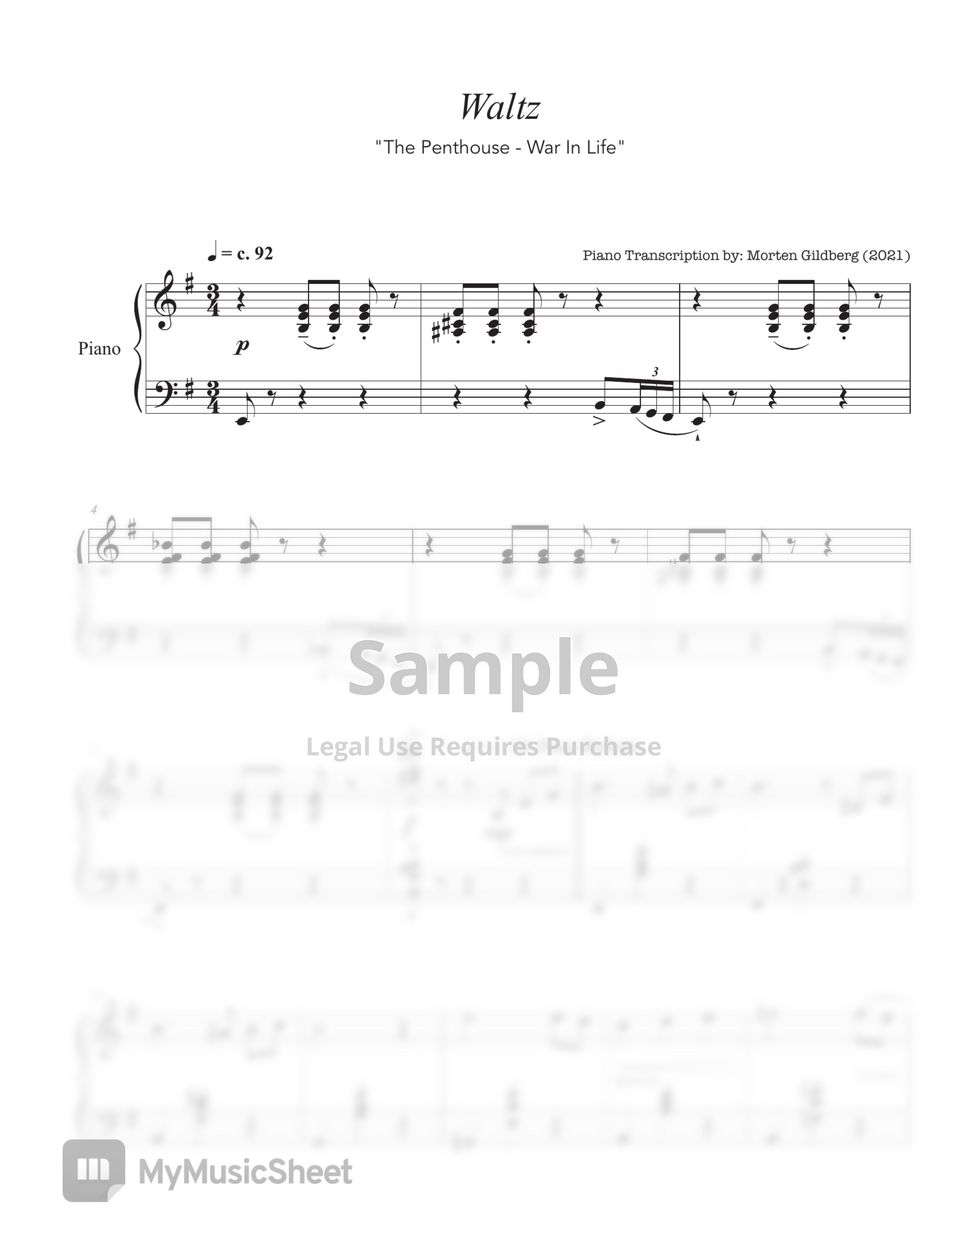 The Penthouse - (펜트하우스) BGM - 'Waltz' - piano arrangement by Morten Gildberg